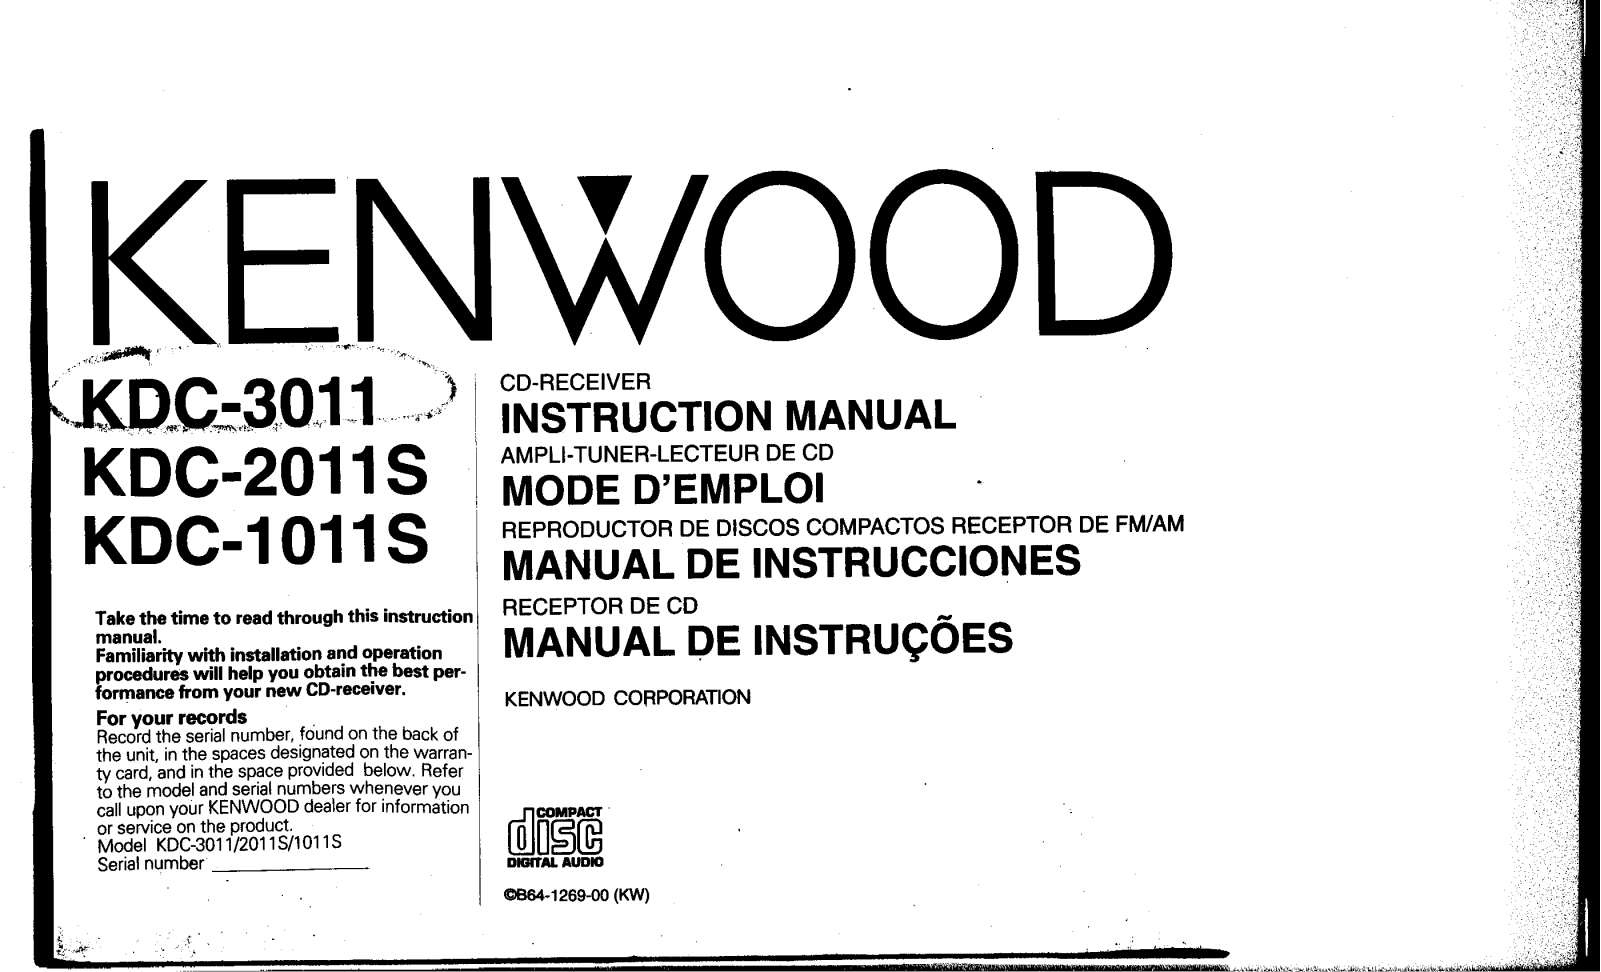 Kenwood KDC-1011S, KDC-2011S, KDC-3011 Owner's Manual